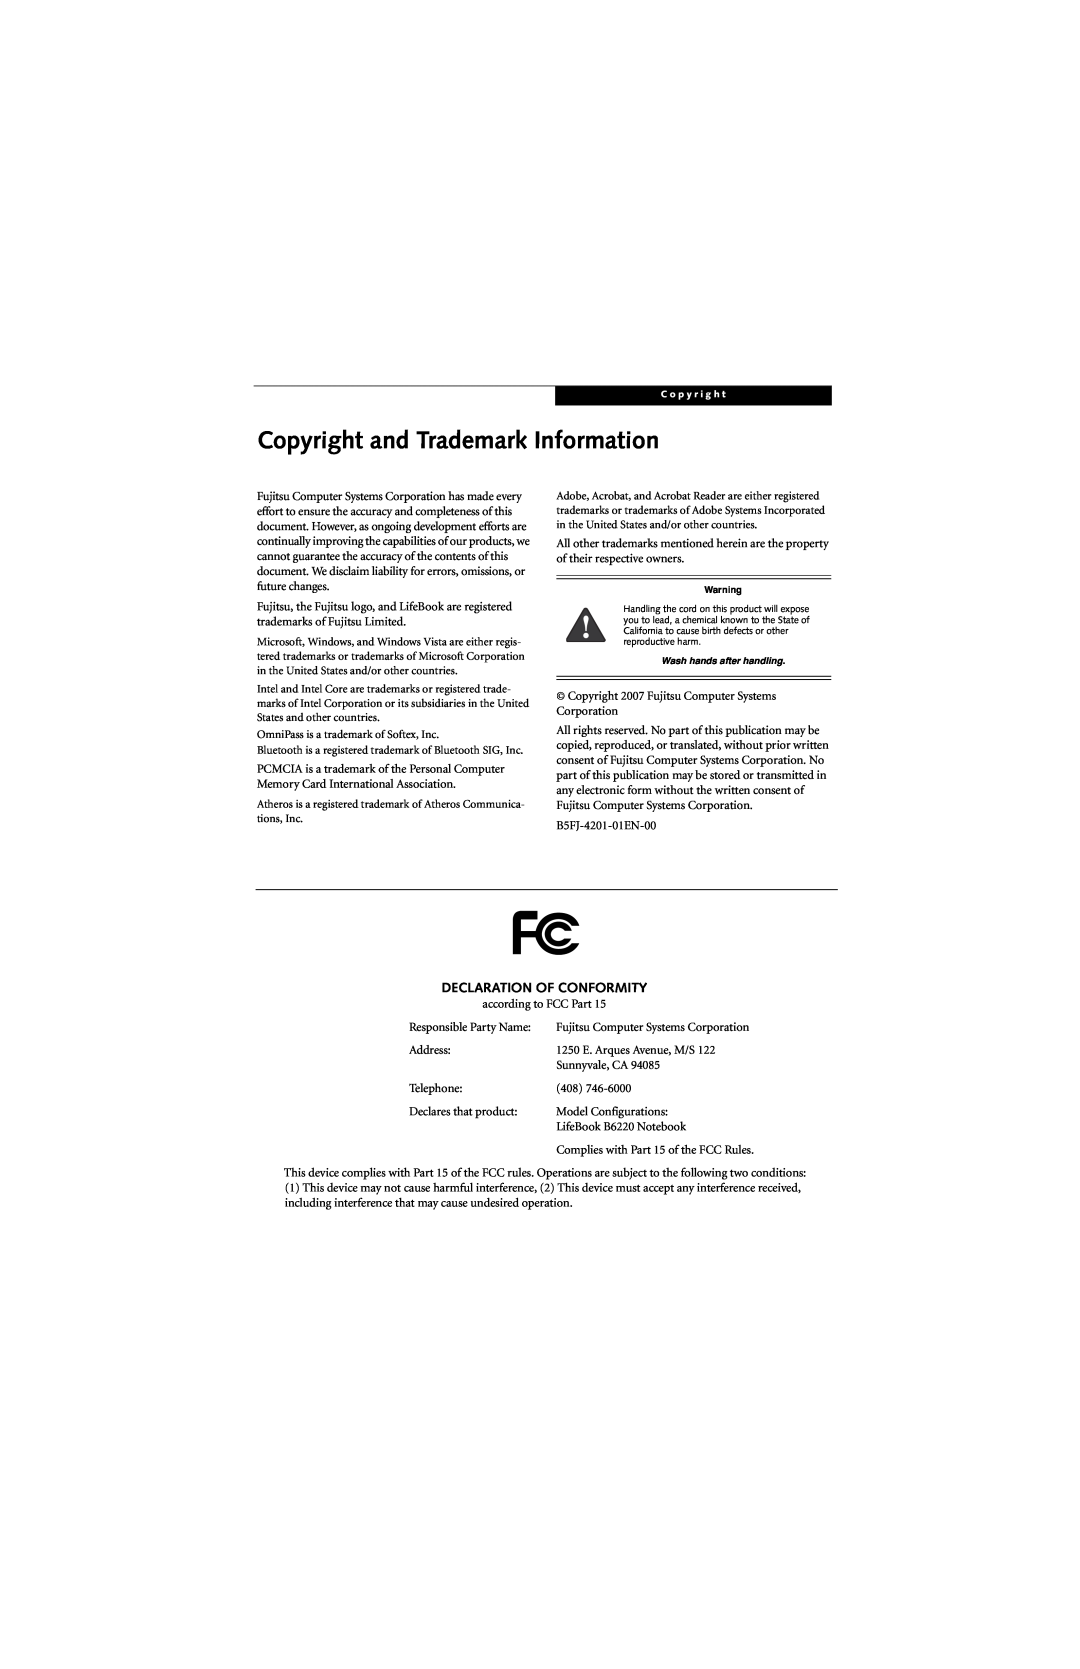 Fujitsu B6220 manual Copyright and Trademark Information, Declaration Of Conformity 